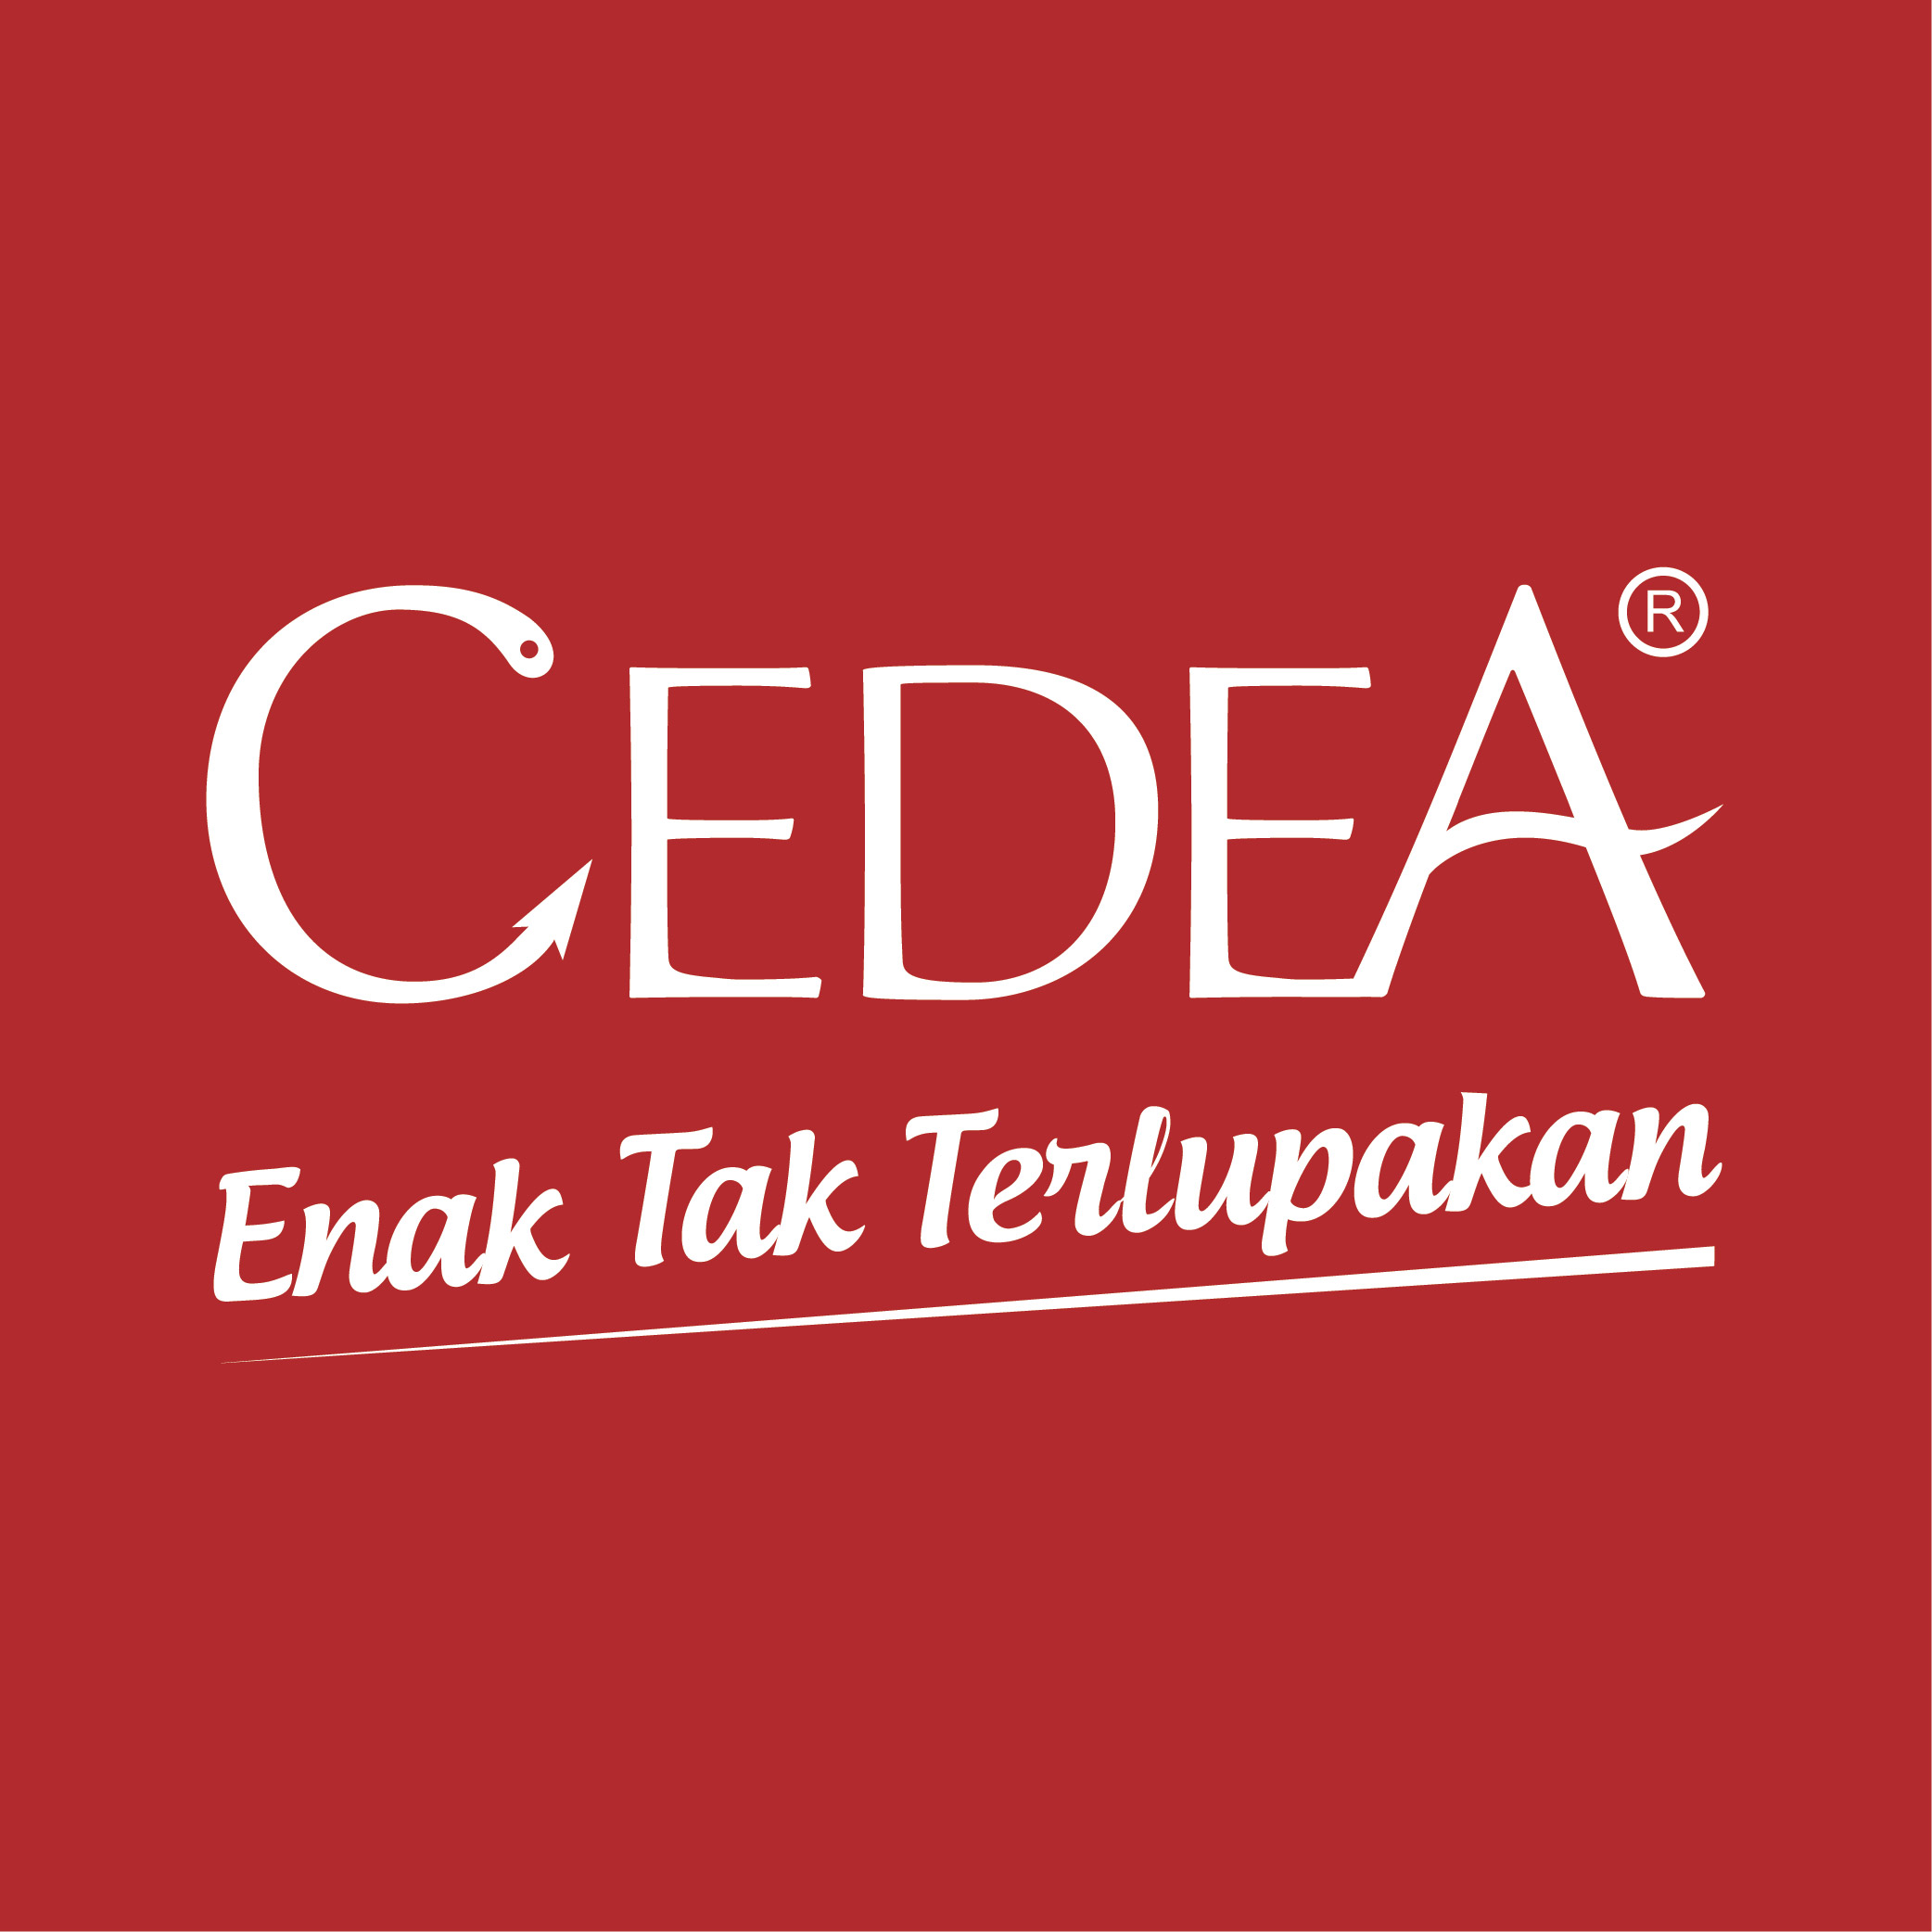 Cedea Jakarta Pusat Official Store